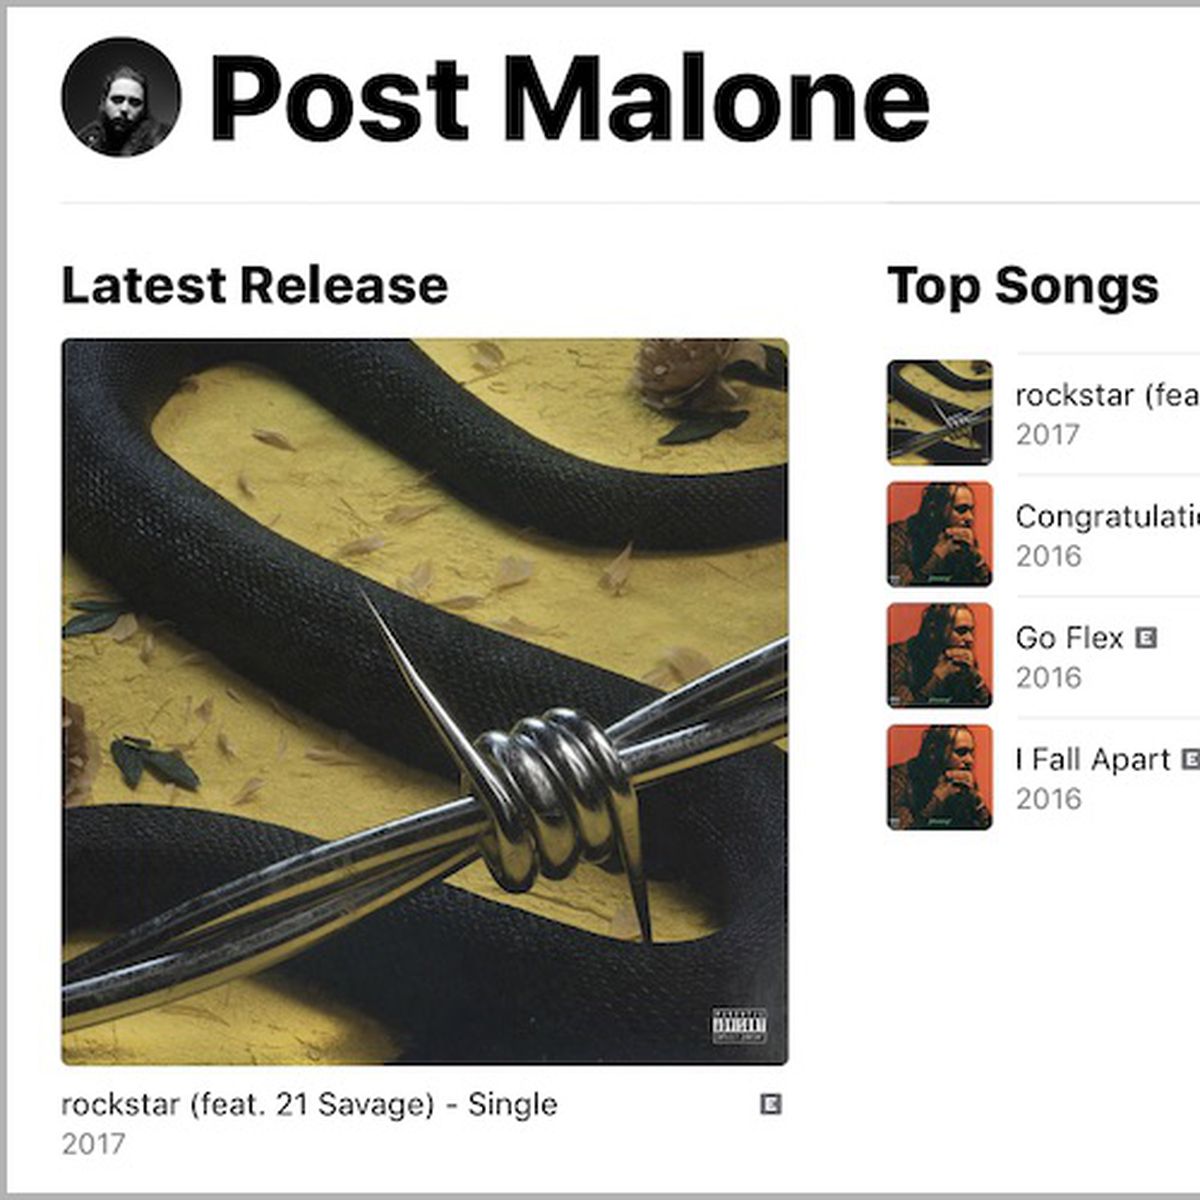 Post Malone's “Rockstar” set a new Apple Music streaming record